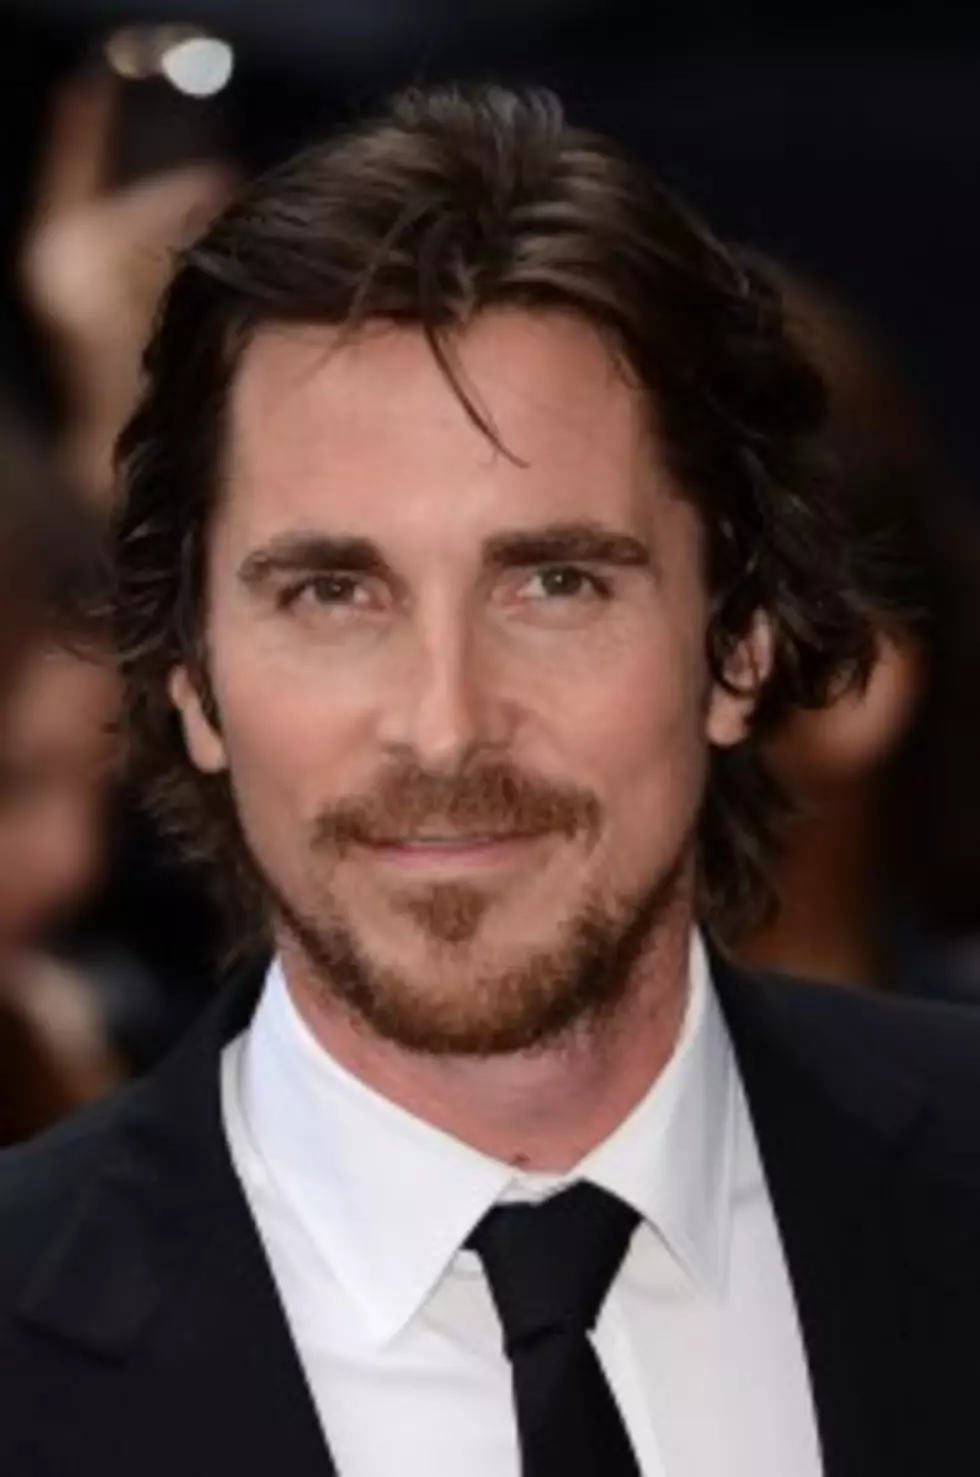 Christian Bale Visits Shooting Victims